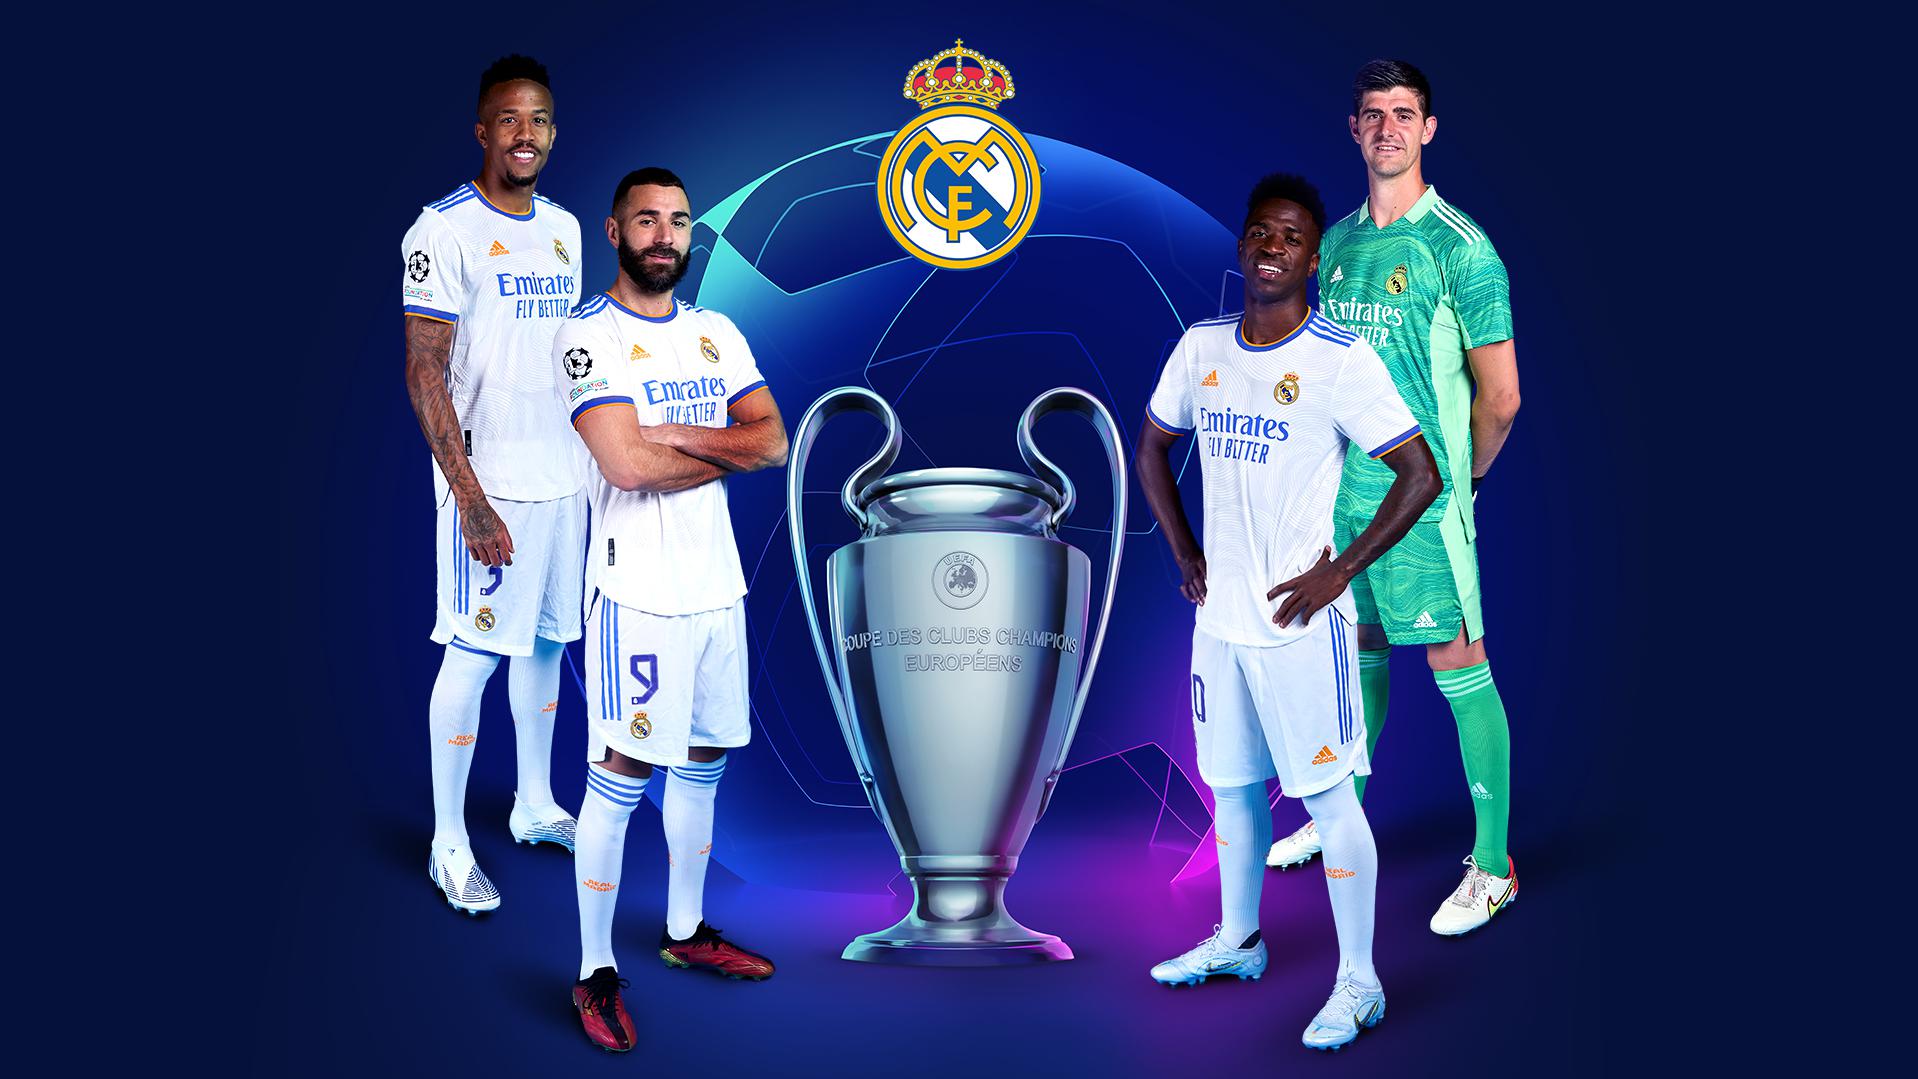 Real Madrid, vainqueur de l'UEFA Champions League 2021/22